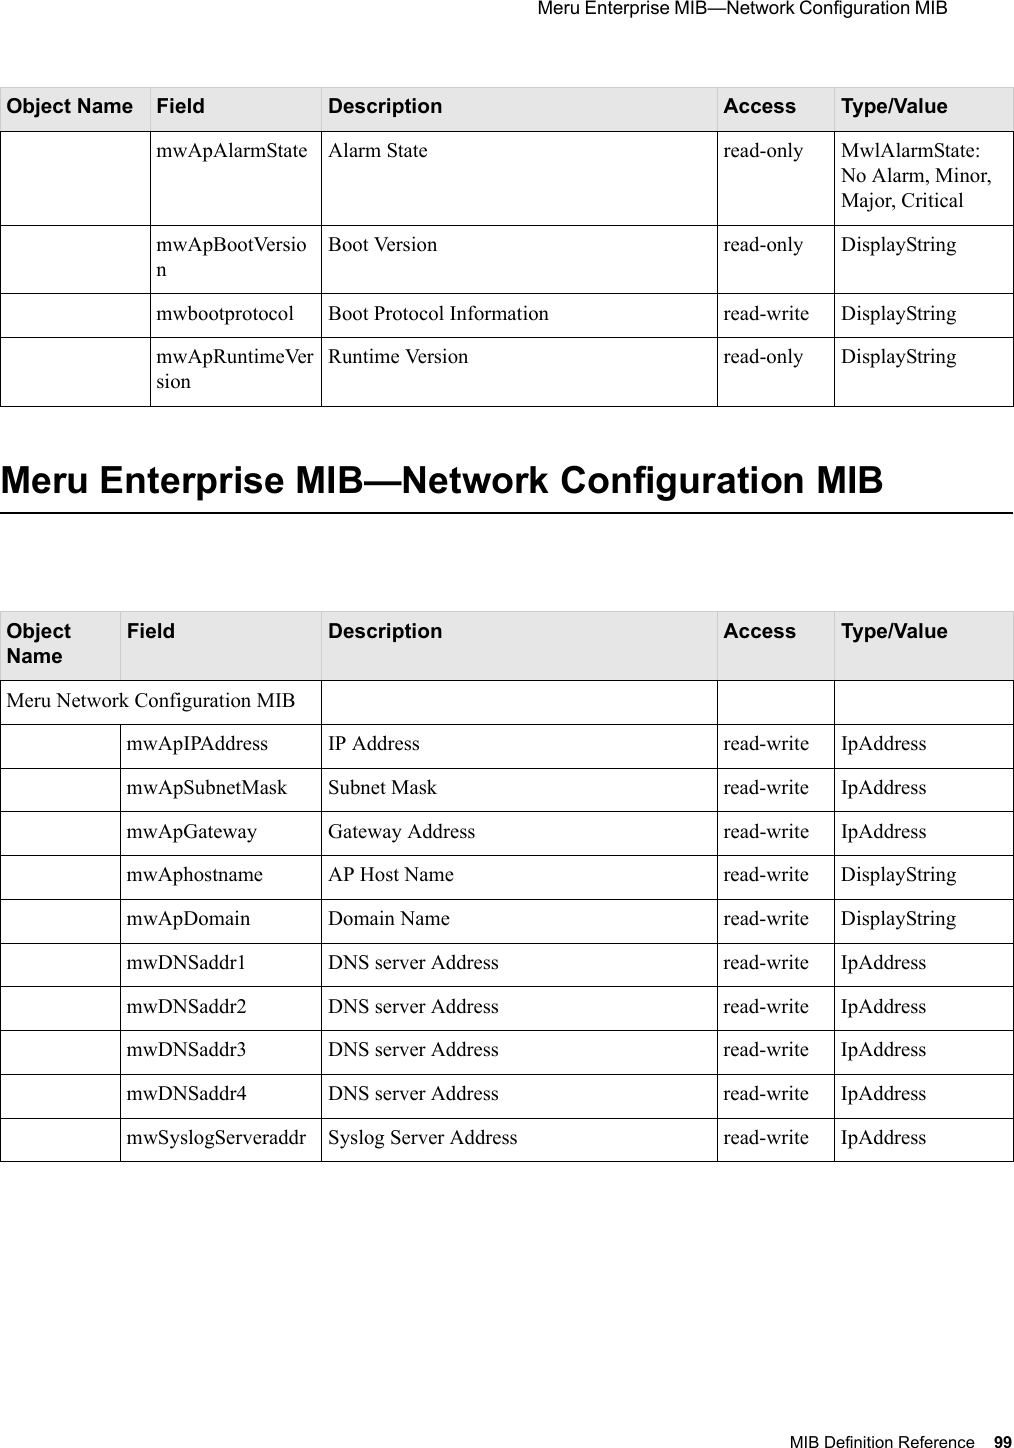  Meru Enterprise MIB—Network Configuration MIB MIB Definition Reference 99 Meru Enterprise MIB—Network Configuration MIBmwApAlarmState Alarm State read-only MwlAlarmState: No Alarm, Minor, Major, CriticalmwApBootVersionBoot Version read-only DisplayStringmwbootprotocol Boot Protocol Information read-write DisplayStringmwApRuntimeVersionRuntime Version read-only DisplayStringObject NameField Description Access Type/ValueMeru Network Configuration MIBmwApIPAddress IP Address read-write IpAddressmwApSubnetMask Subnet Mask read-write IpAddressmwApGateway Gateway Address read-write IpAddressmwAphostname AP Host Name read-write DisplayStringmwApDomain Domain Name read-write DisplayStringmwDNSaddr1 DNS server Address read-write IpAddressmwDNSaddr2 DNS server Address read-write IpAddressmwDNSaddr3 DNS server Address read-write IpAddressmwDNSaddr4 DNS server Address read-write IpAddressmwSyslogServeraddr Syslog Server Address read-write IpAddressObject Name Field Description Access Type/Value